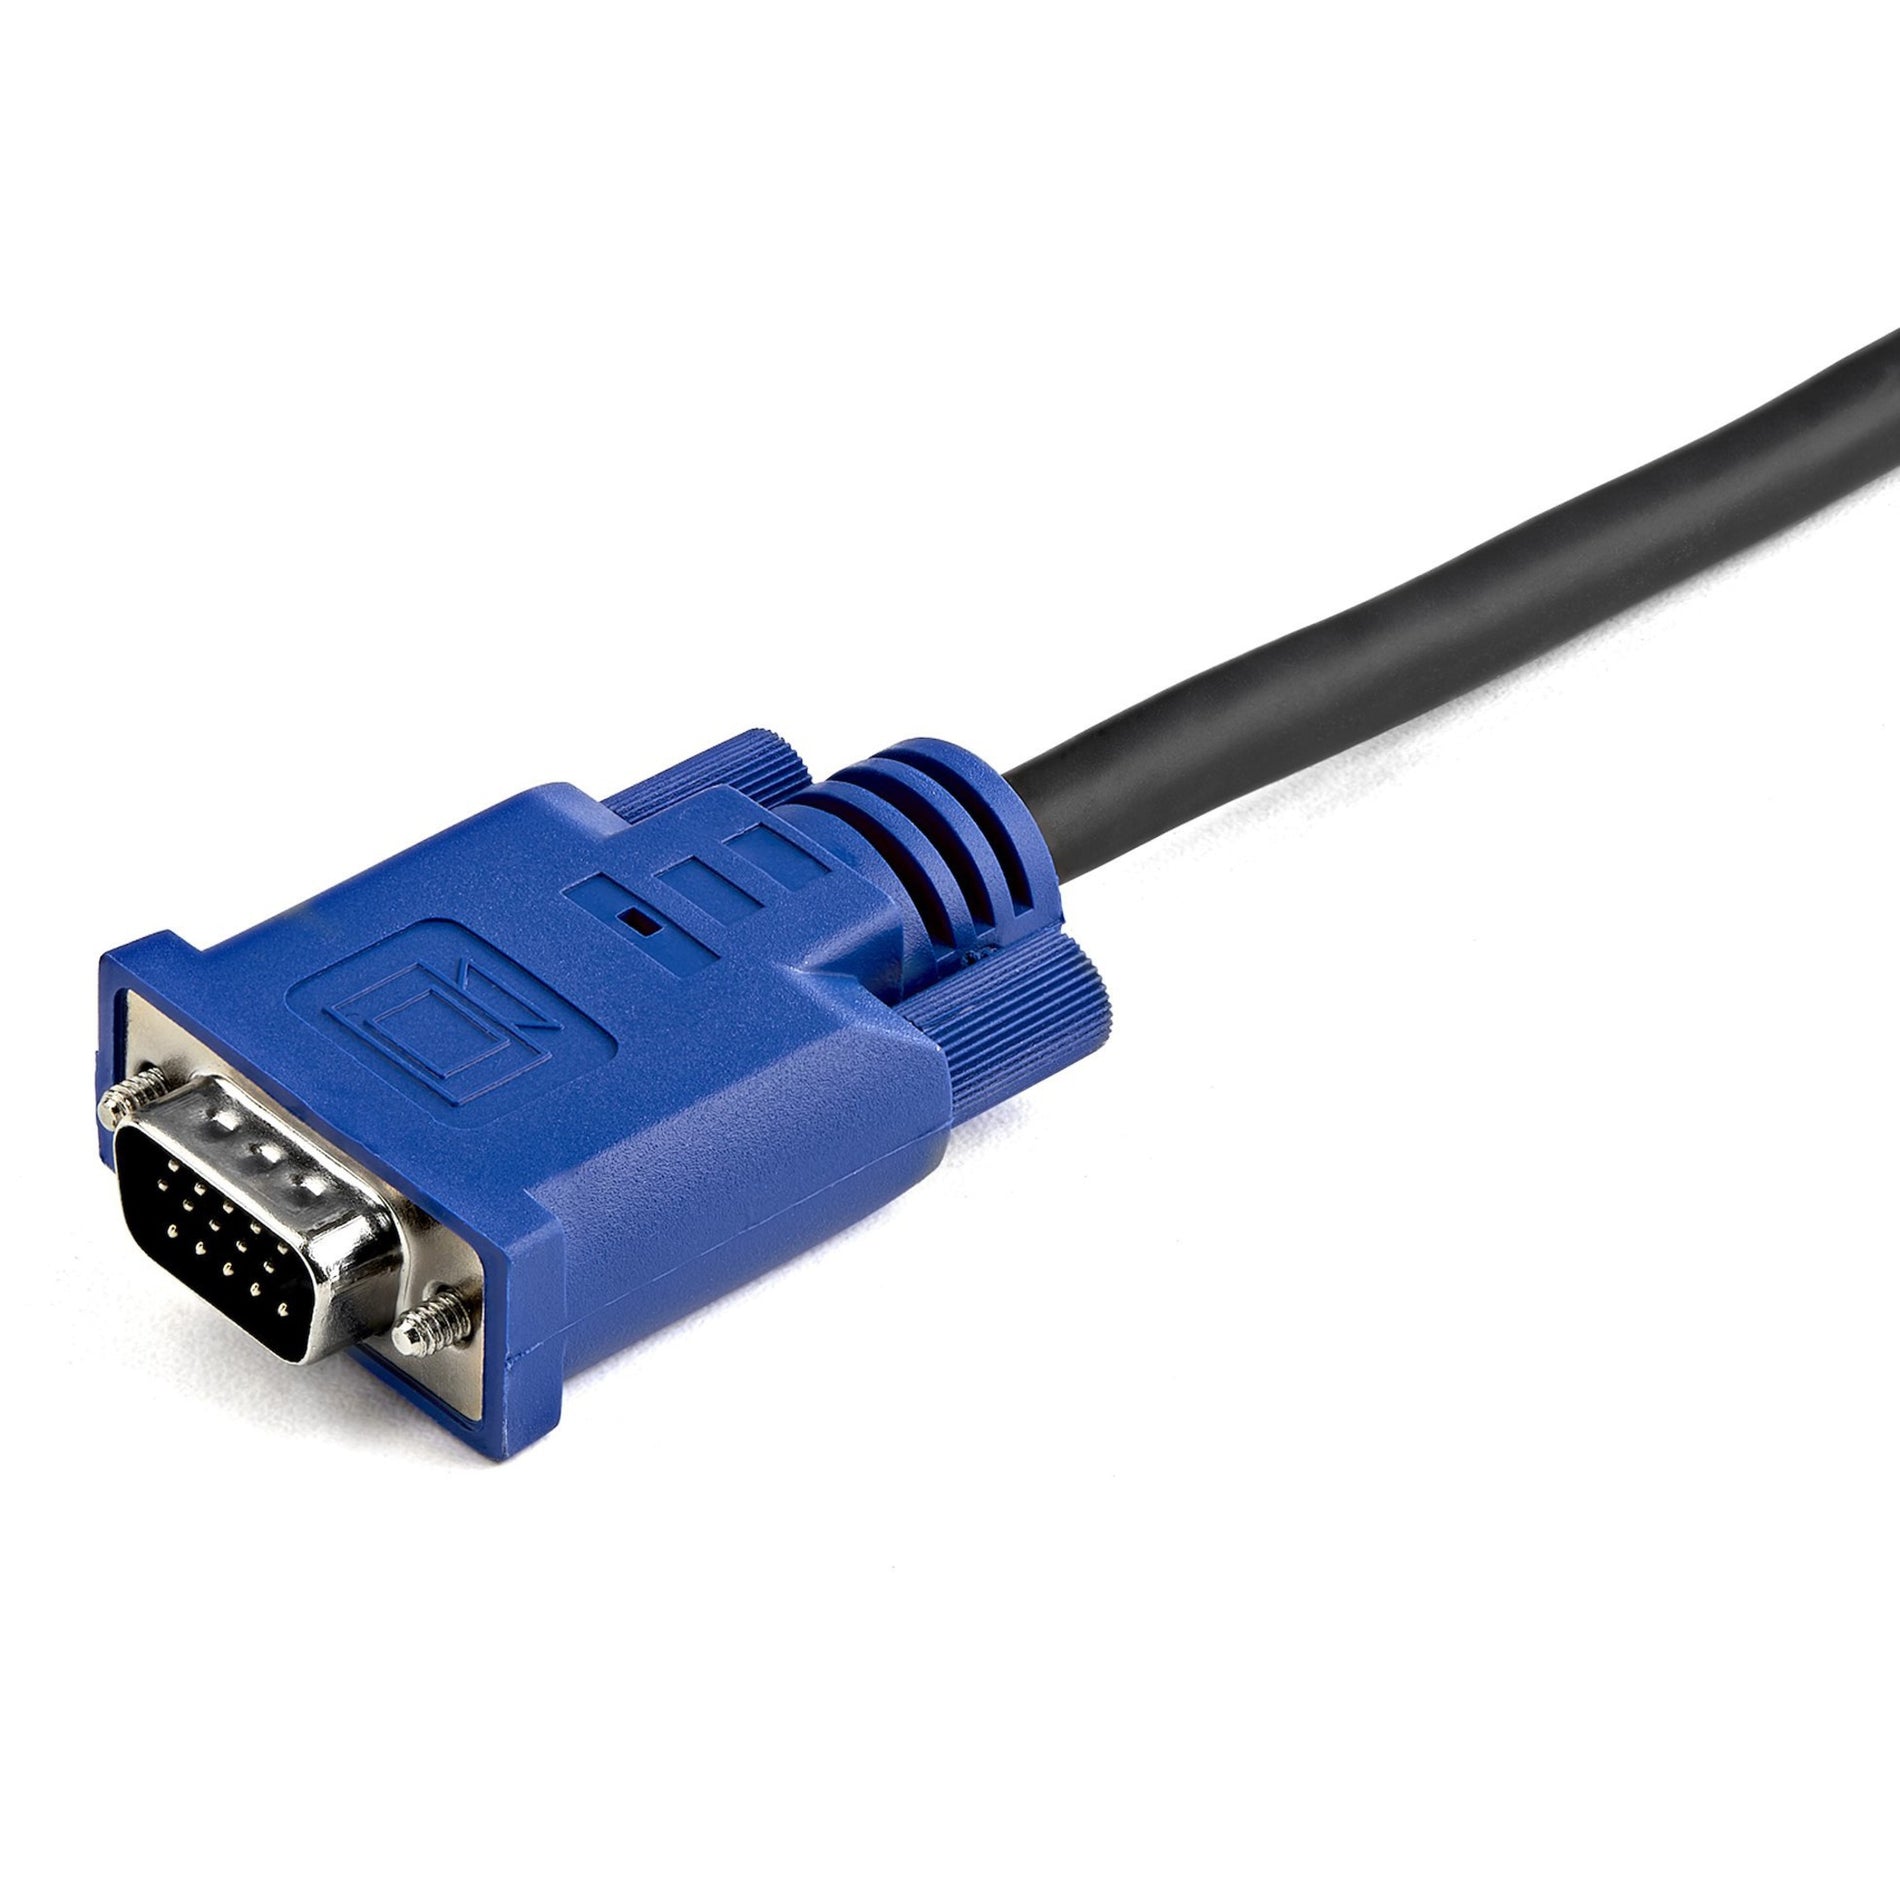 StarTech.com SVECONUS10 10 ft 2-in-1 Ultra Thin USB KVM Cable, Tangle Resistant, Copper Conductor, Black